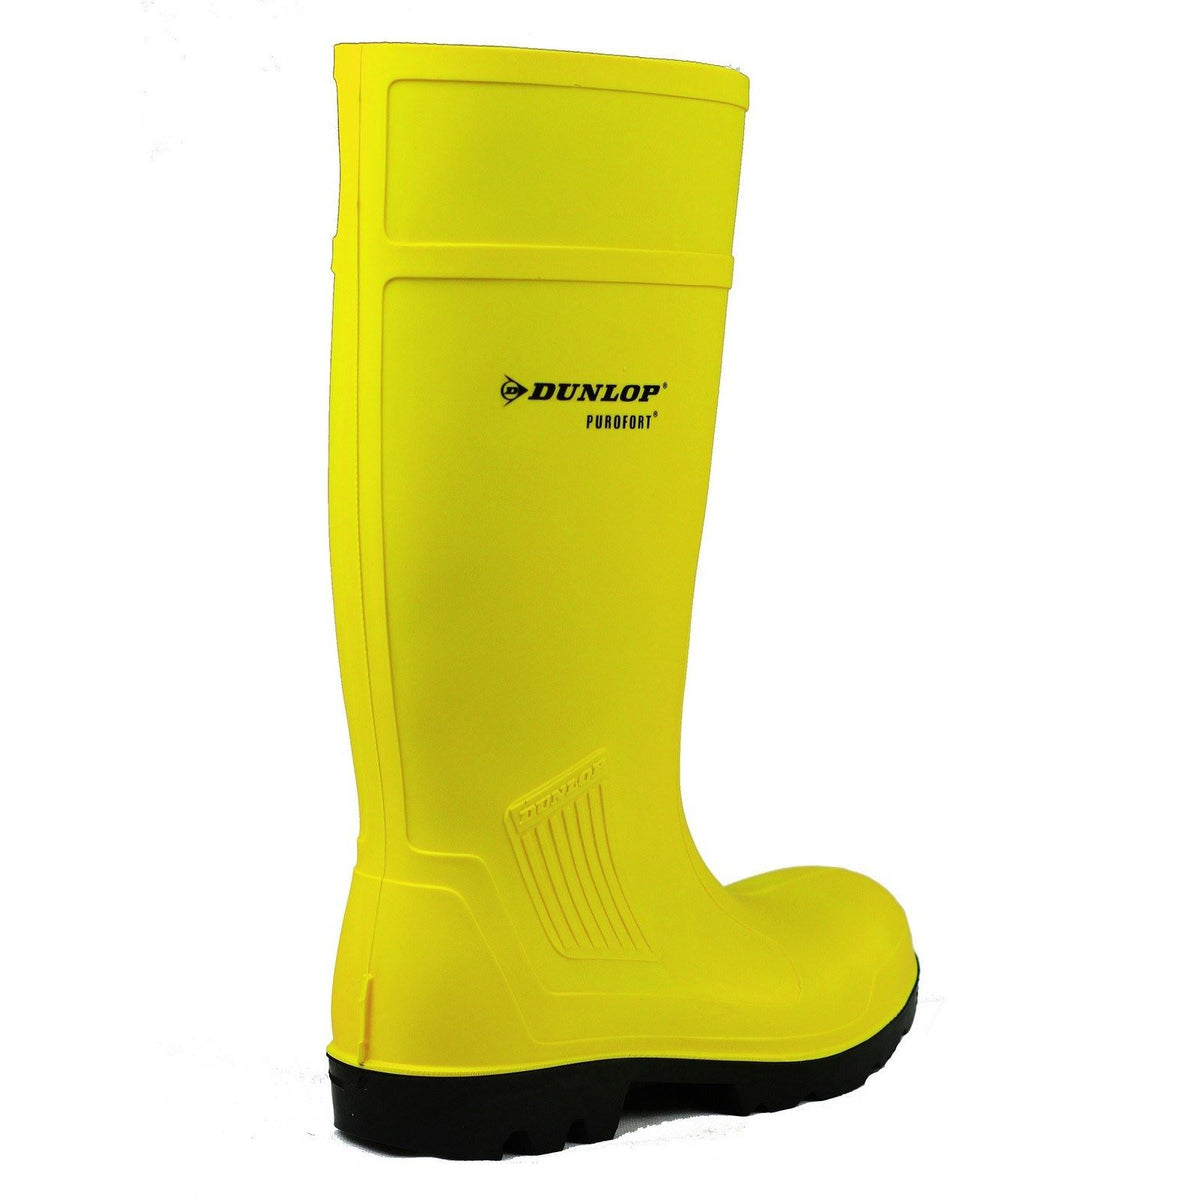 Dunlop Purofort Professional Full Safety Wellingtons